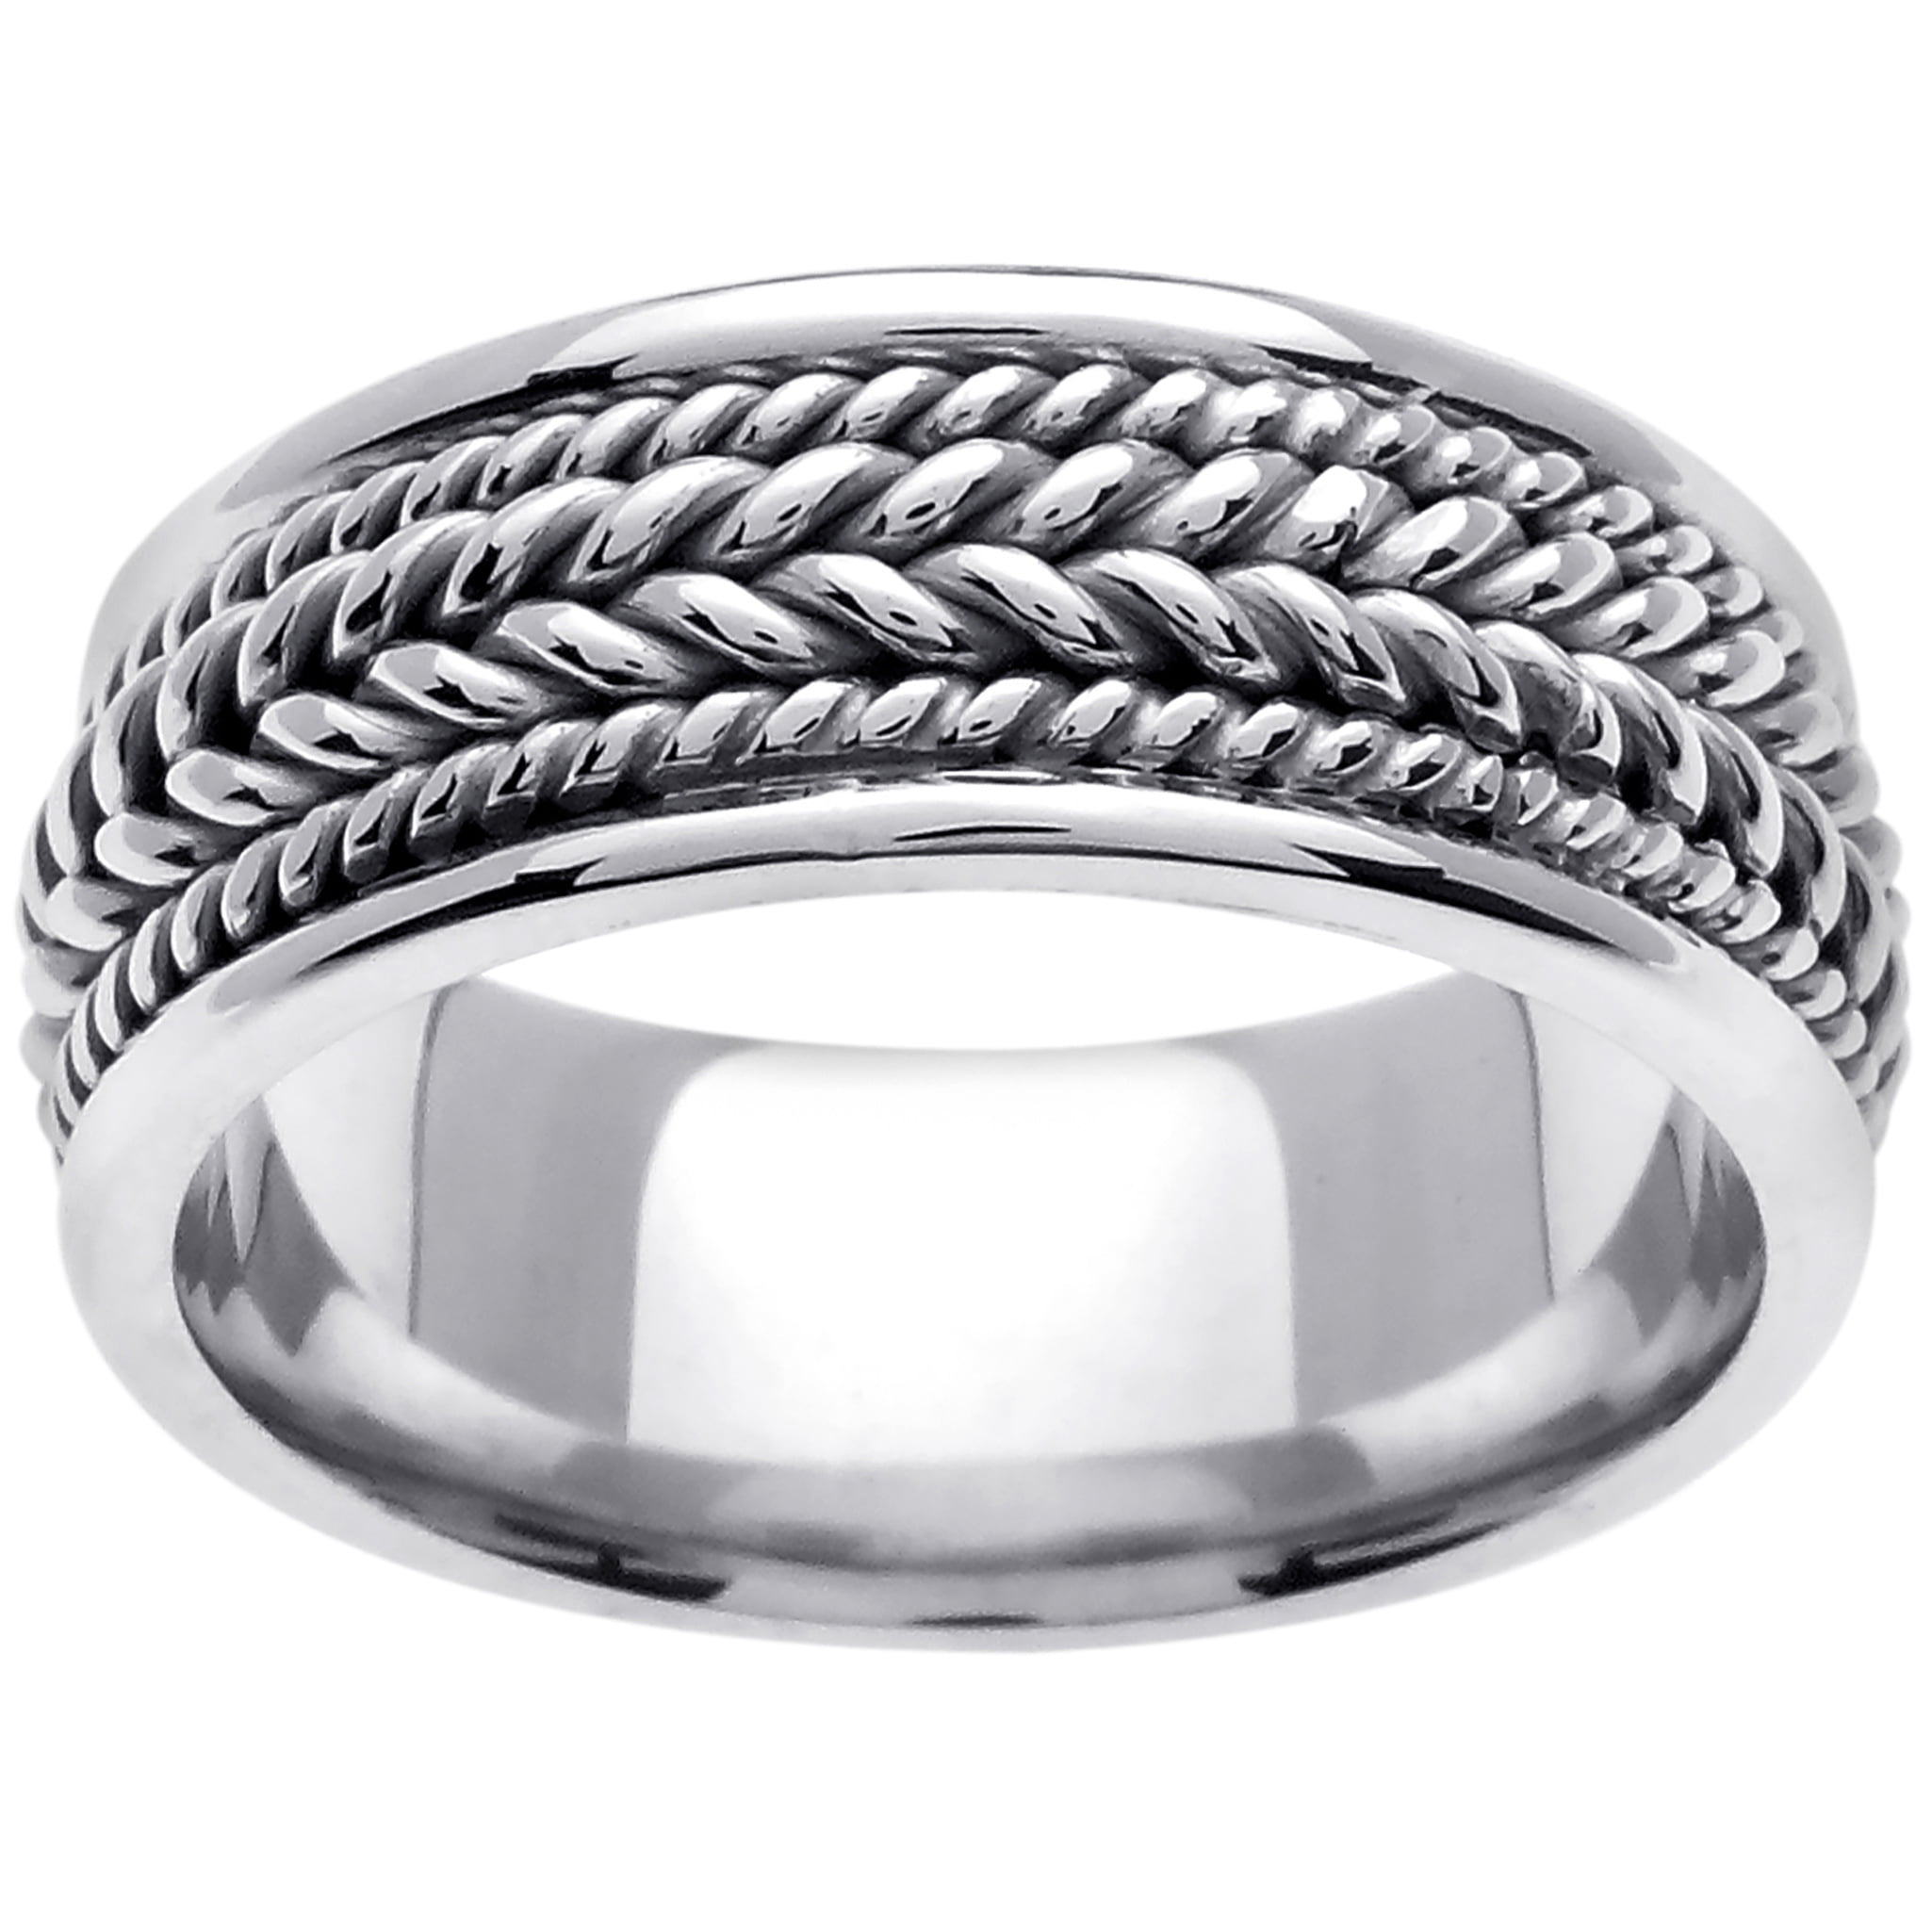 Wedding Rings Depot - Platinum Rope Edge Braid Handmade Comfort Fit ...